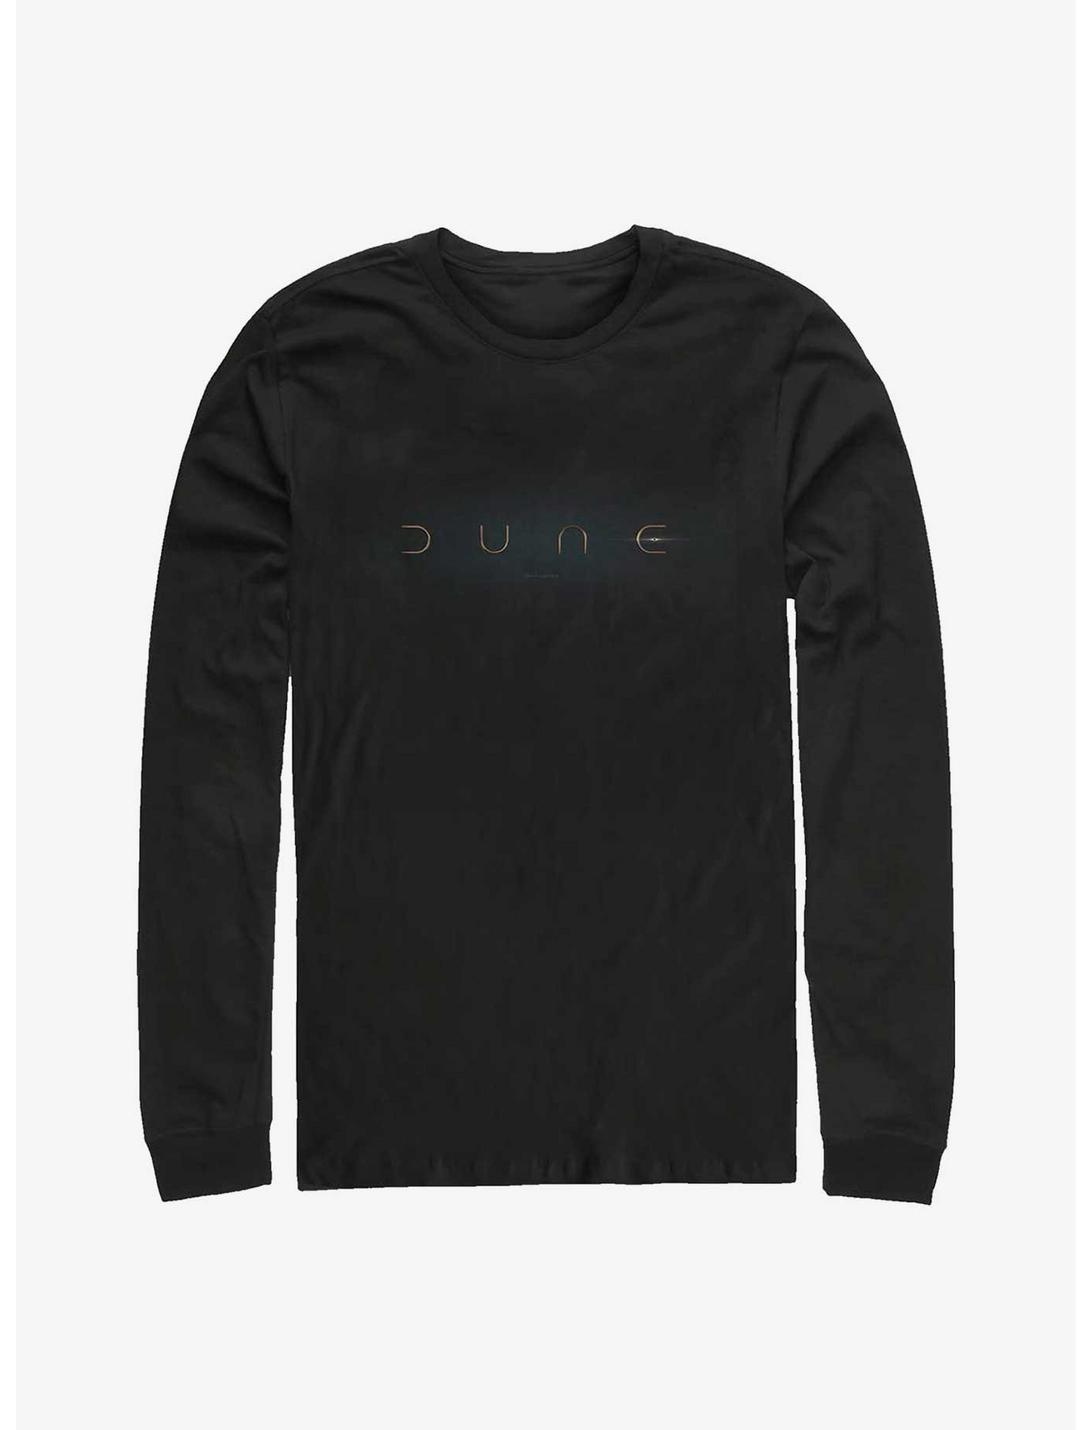 Dune Dune Logo Long-Sleeve T-Shirt, BLACK, hi-res